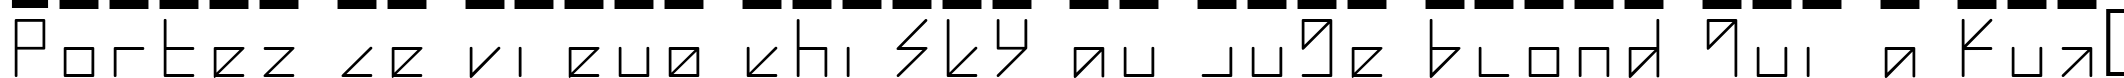 Пример написания шрифтом Pechkin текста на французском